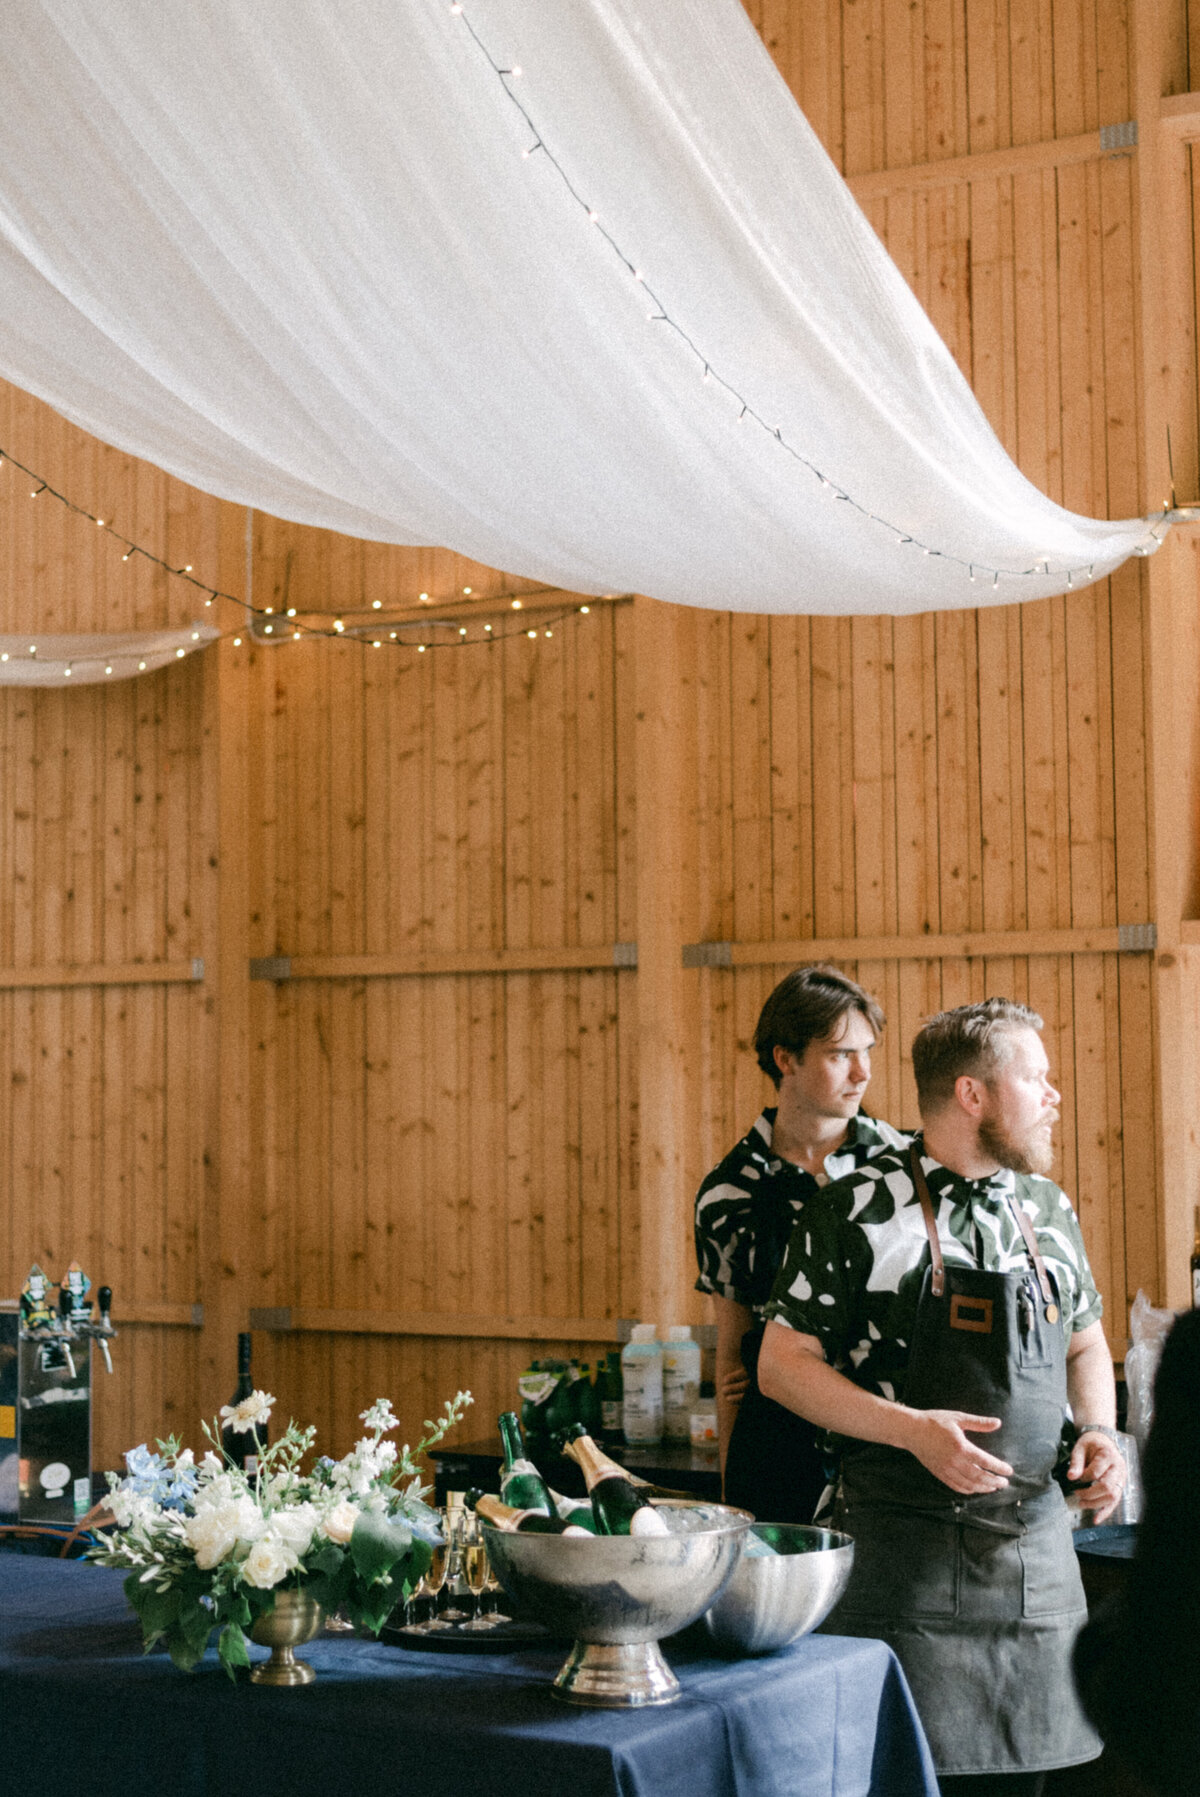 Wedding decoration photographed by wedding photographer Hannika Gabrielsson